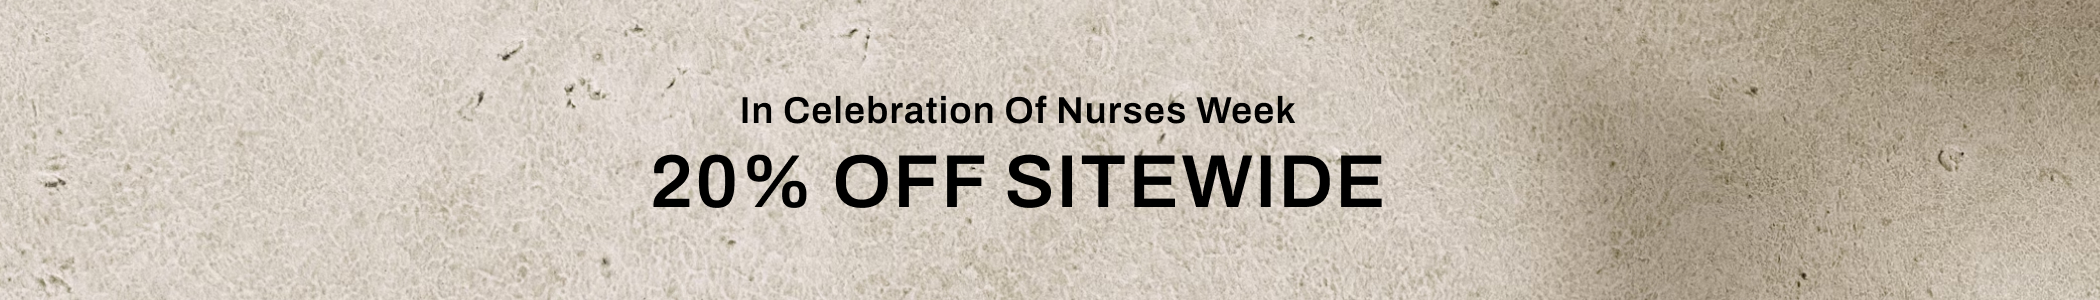 in celebration of nurses week, 20% off sitewide.